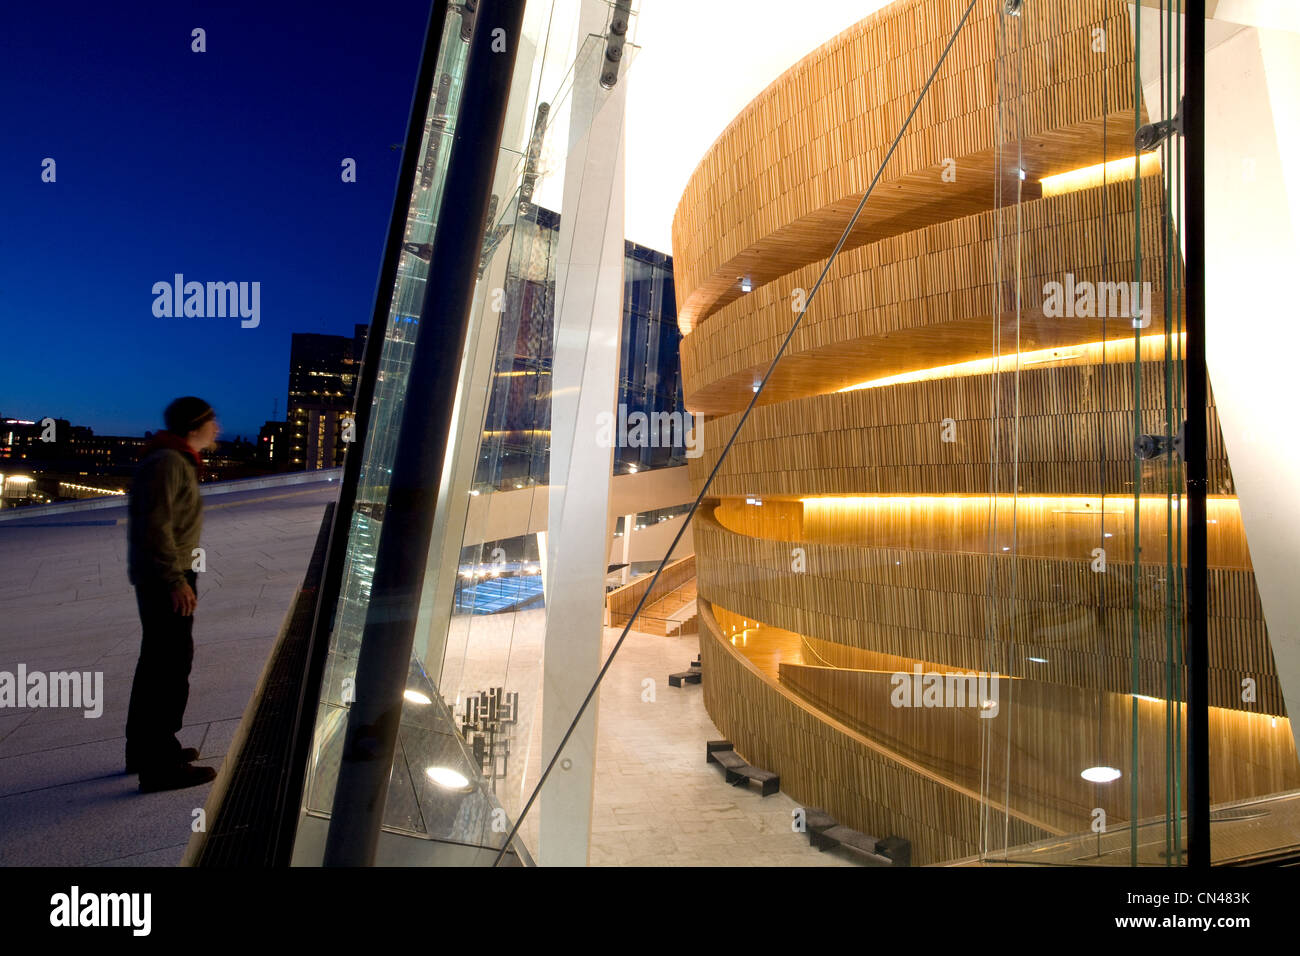 Norway, Oslo, the new Opera house by Snohetta architects in Bjorvika district Stock Photo